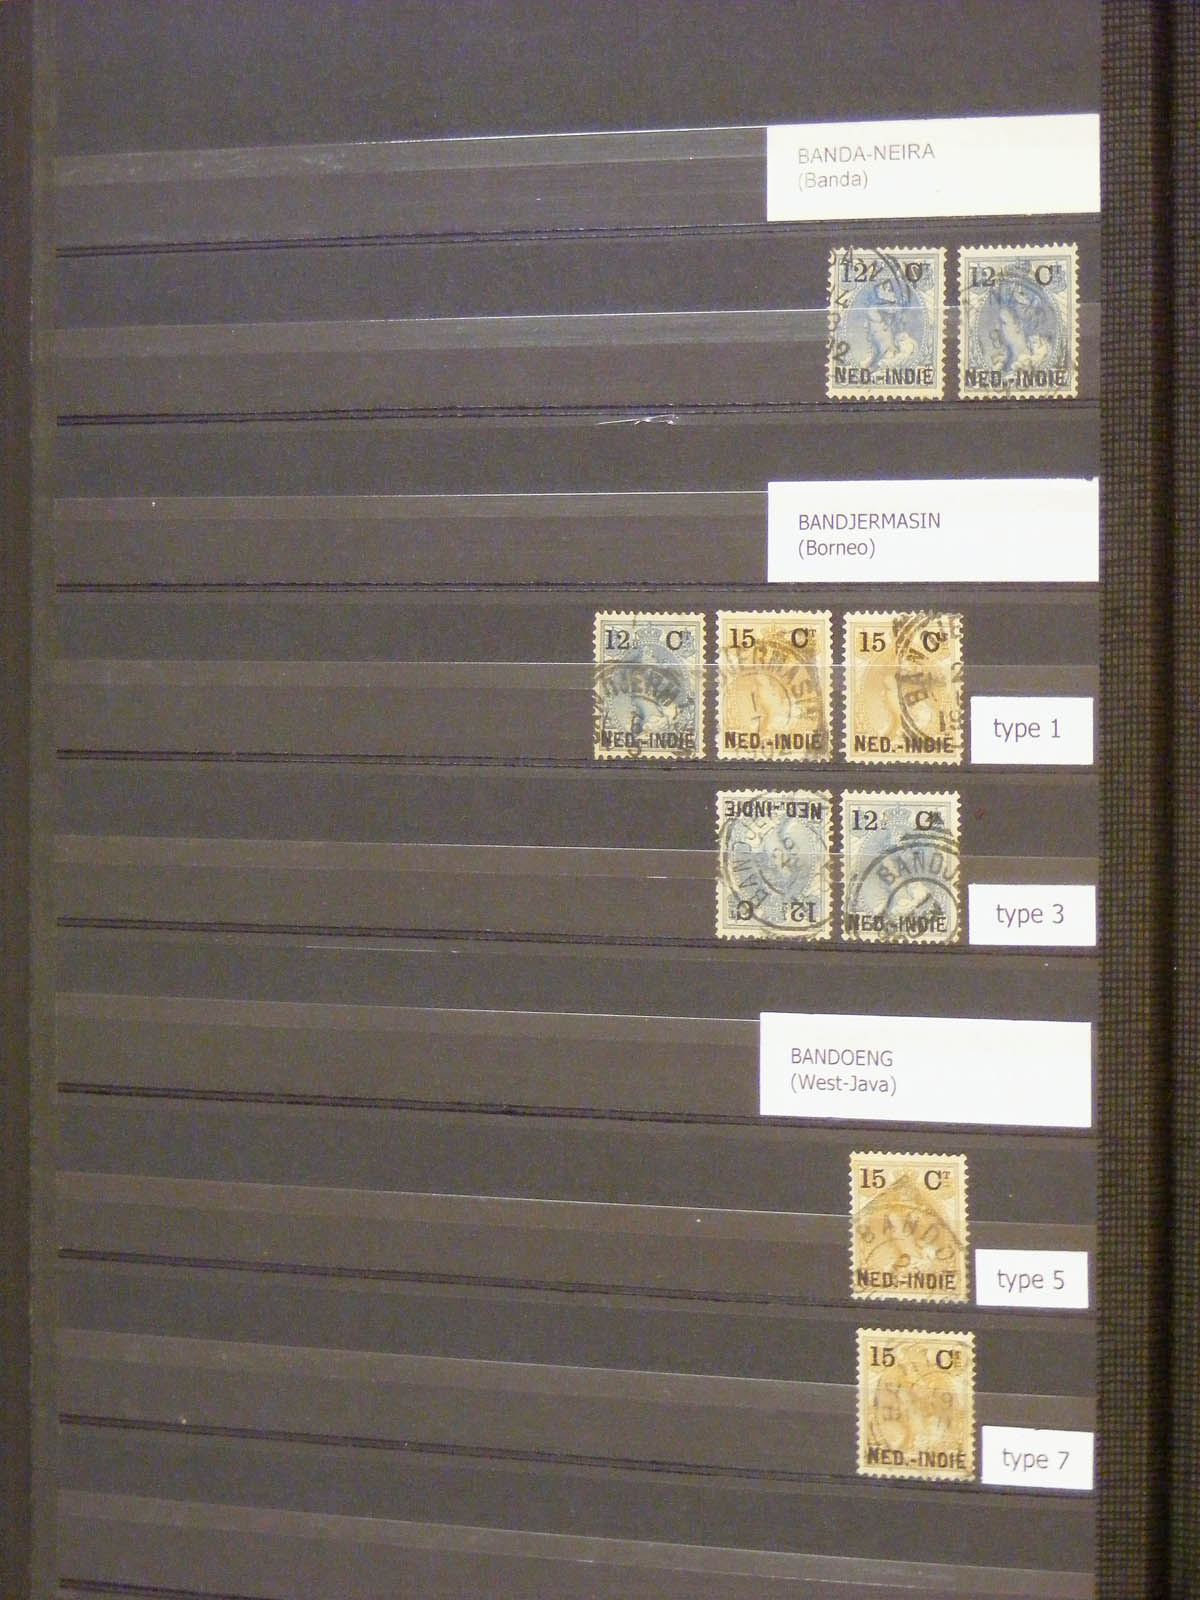 19296 002 - 19296 Nederlands Indië vierkant stempels.